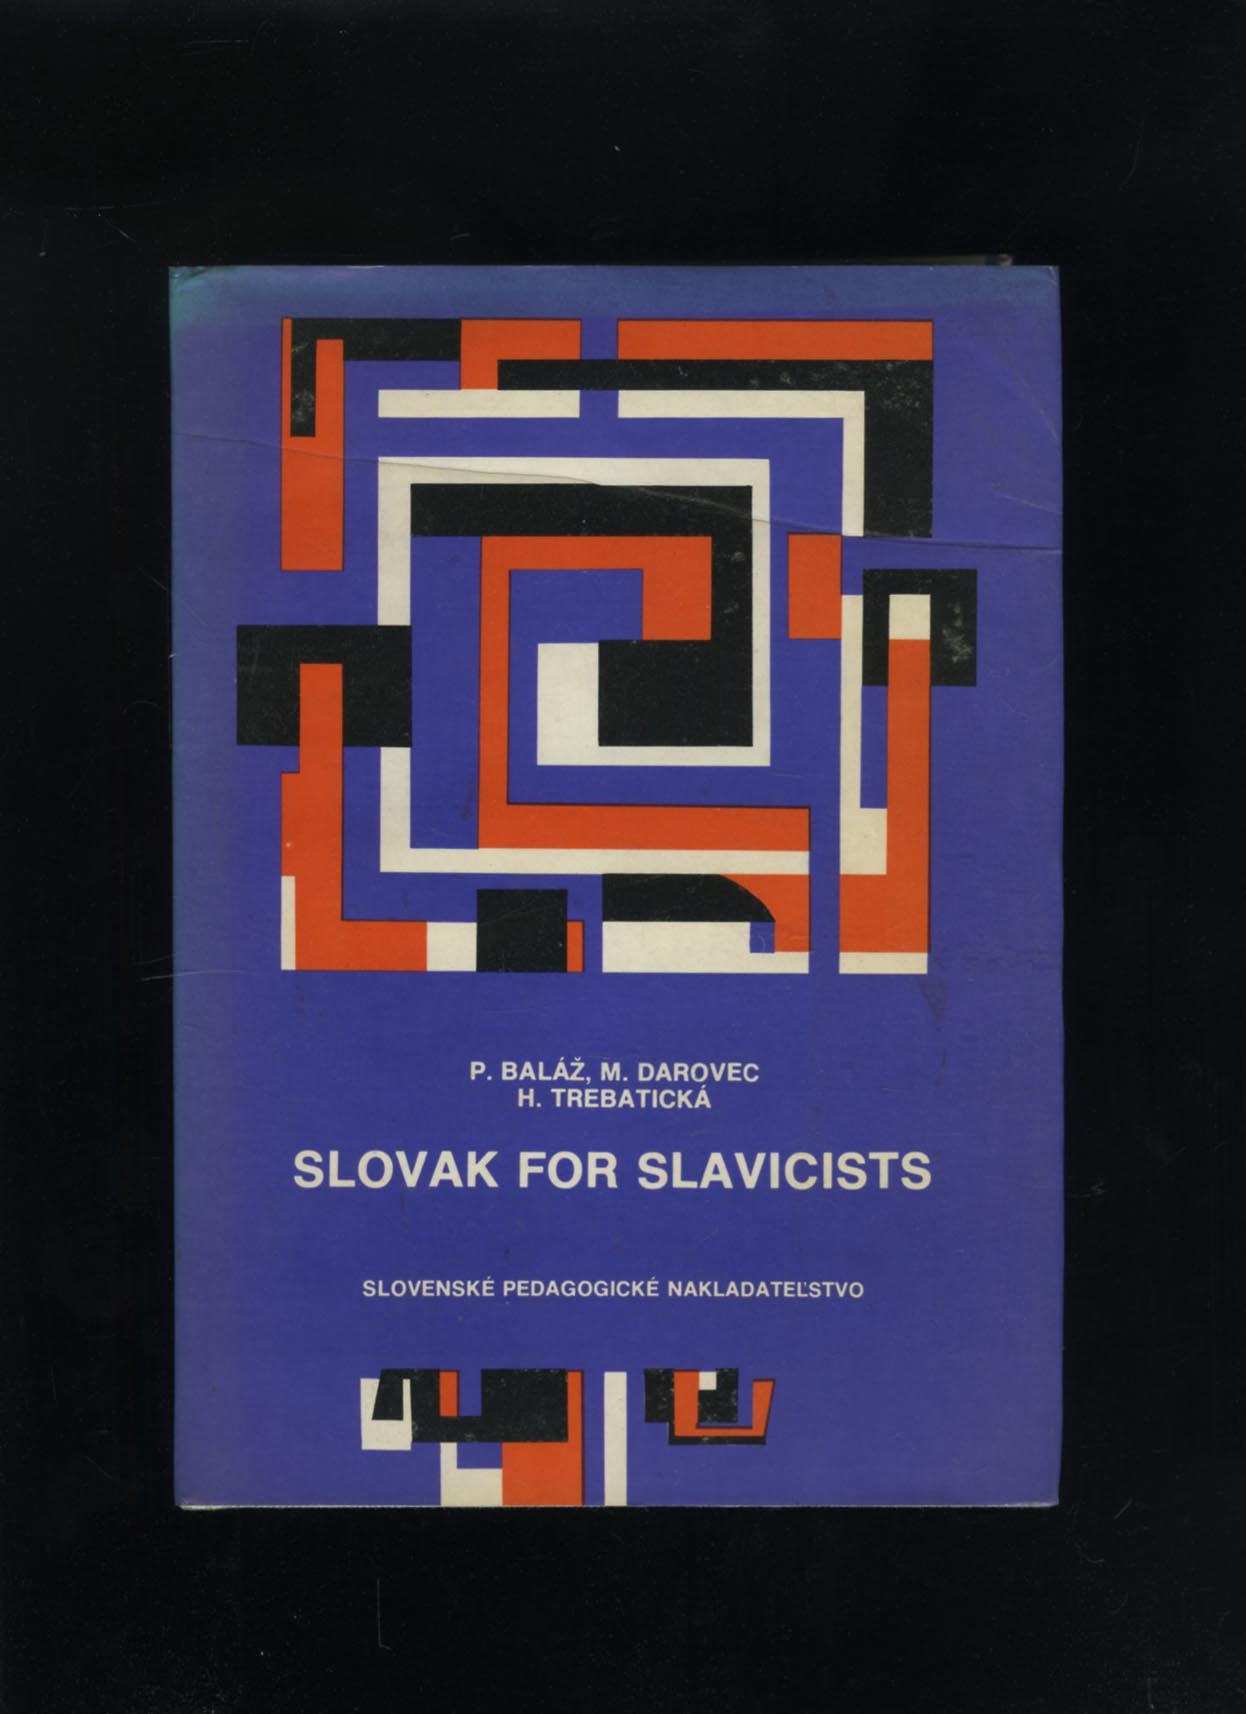 Slovak for Slavicists (H. Trebaticka P. Balaz, M. Darovec)